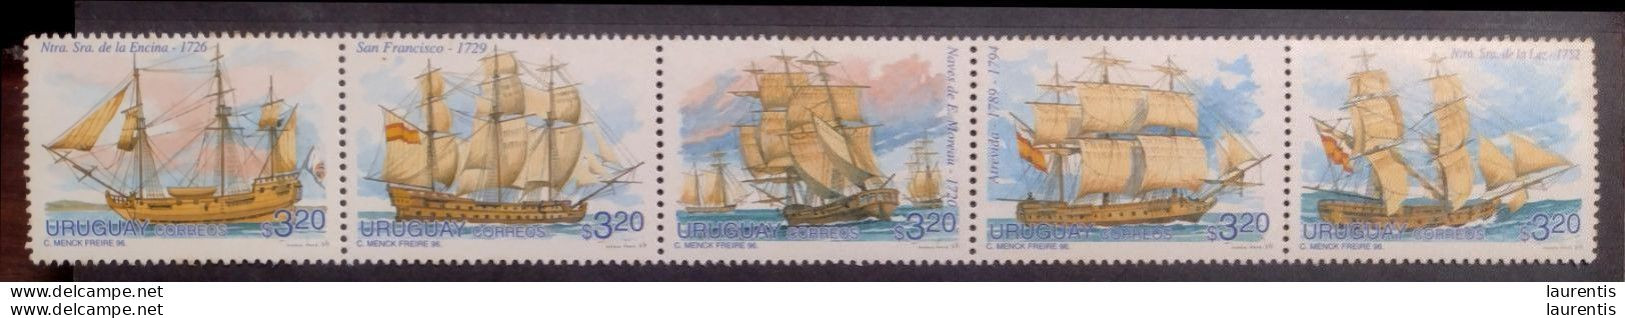 D2785  Ships - Voiliers - Uruguay 1996 MNH - 5,50 .jpg - Barcos